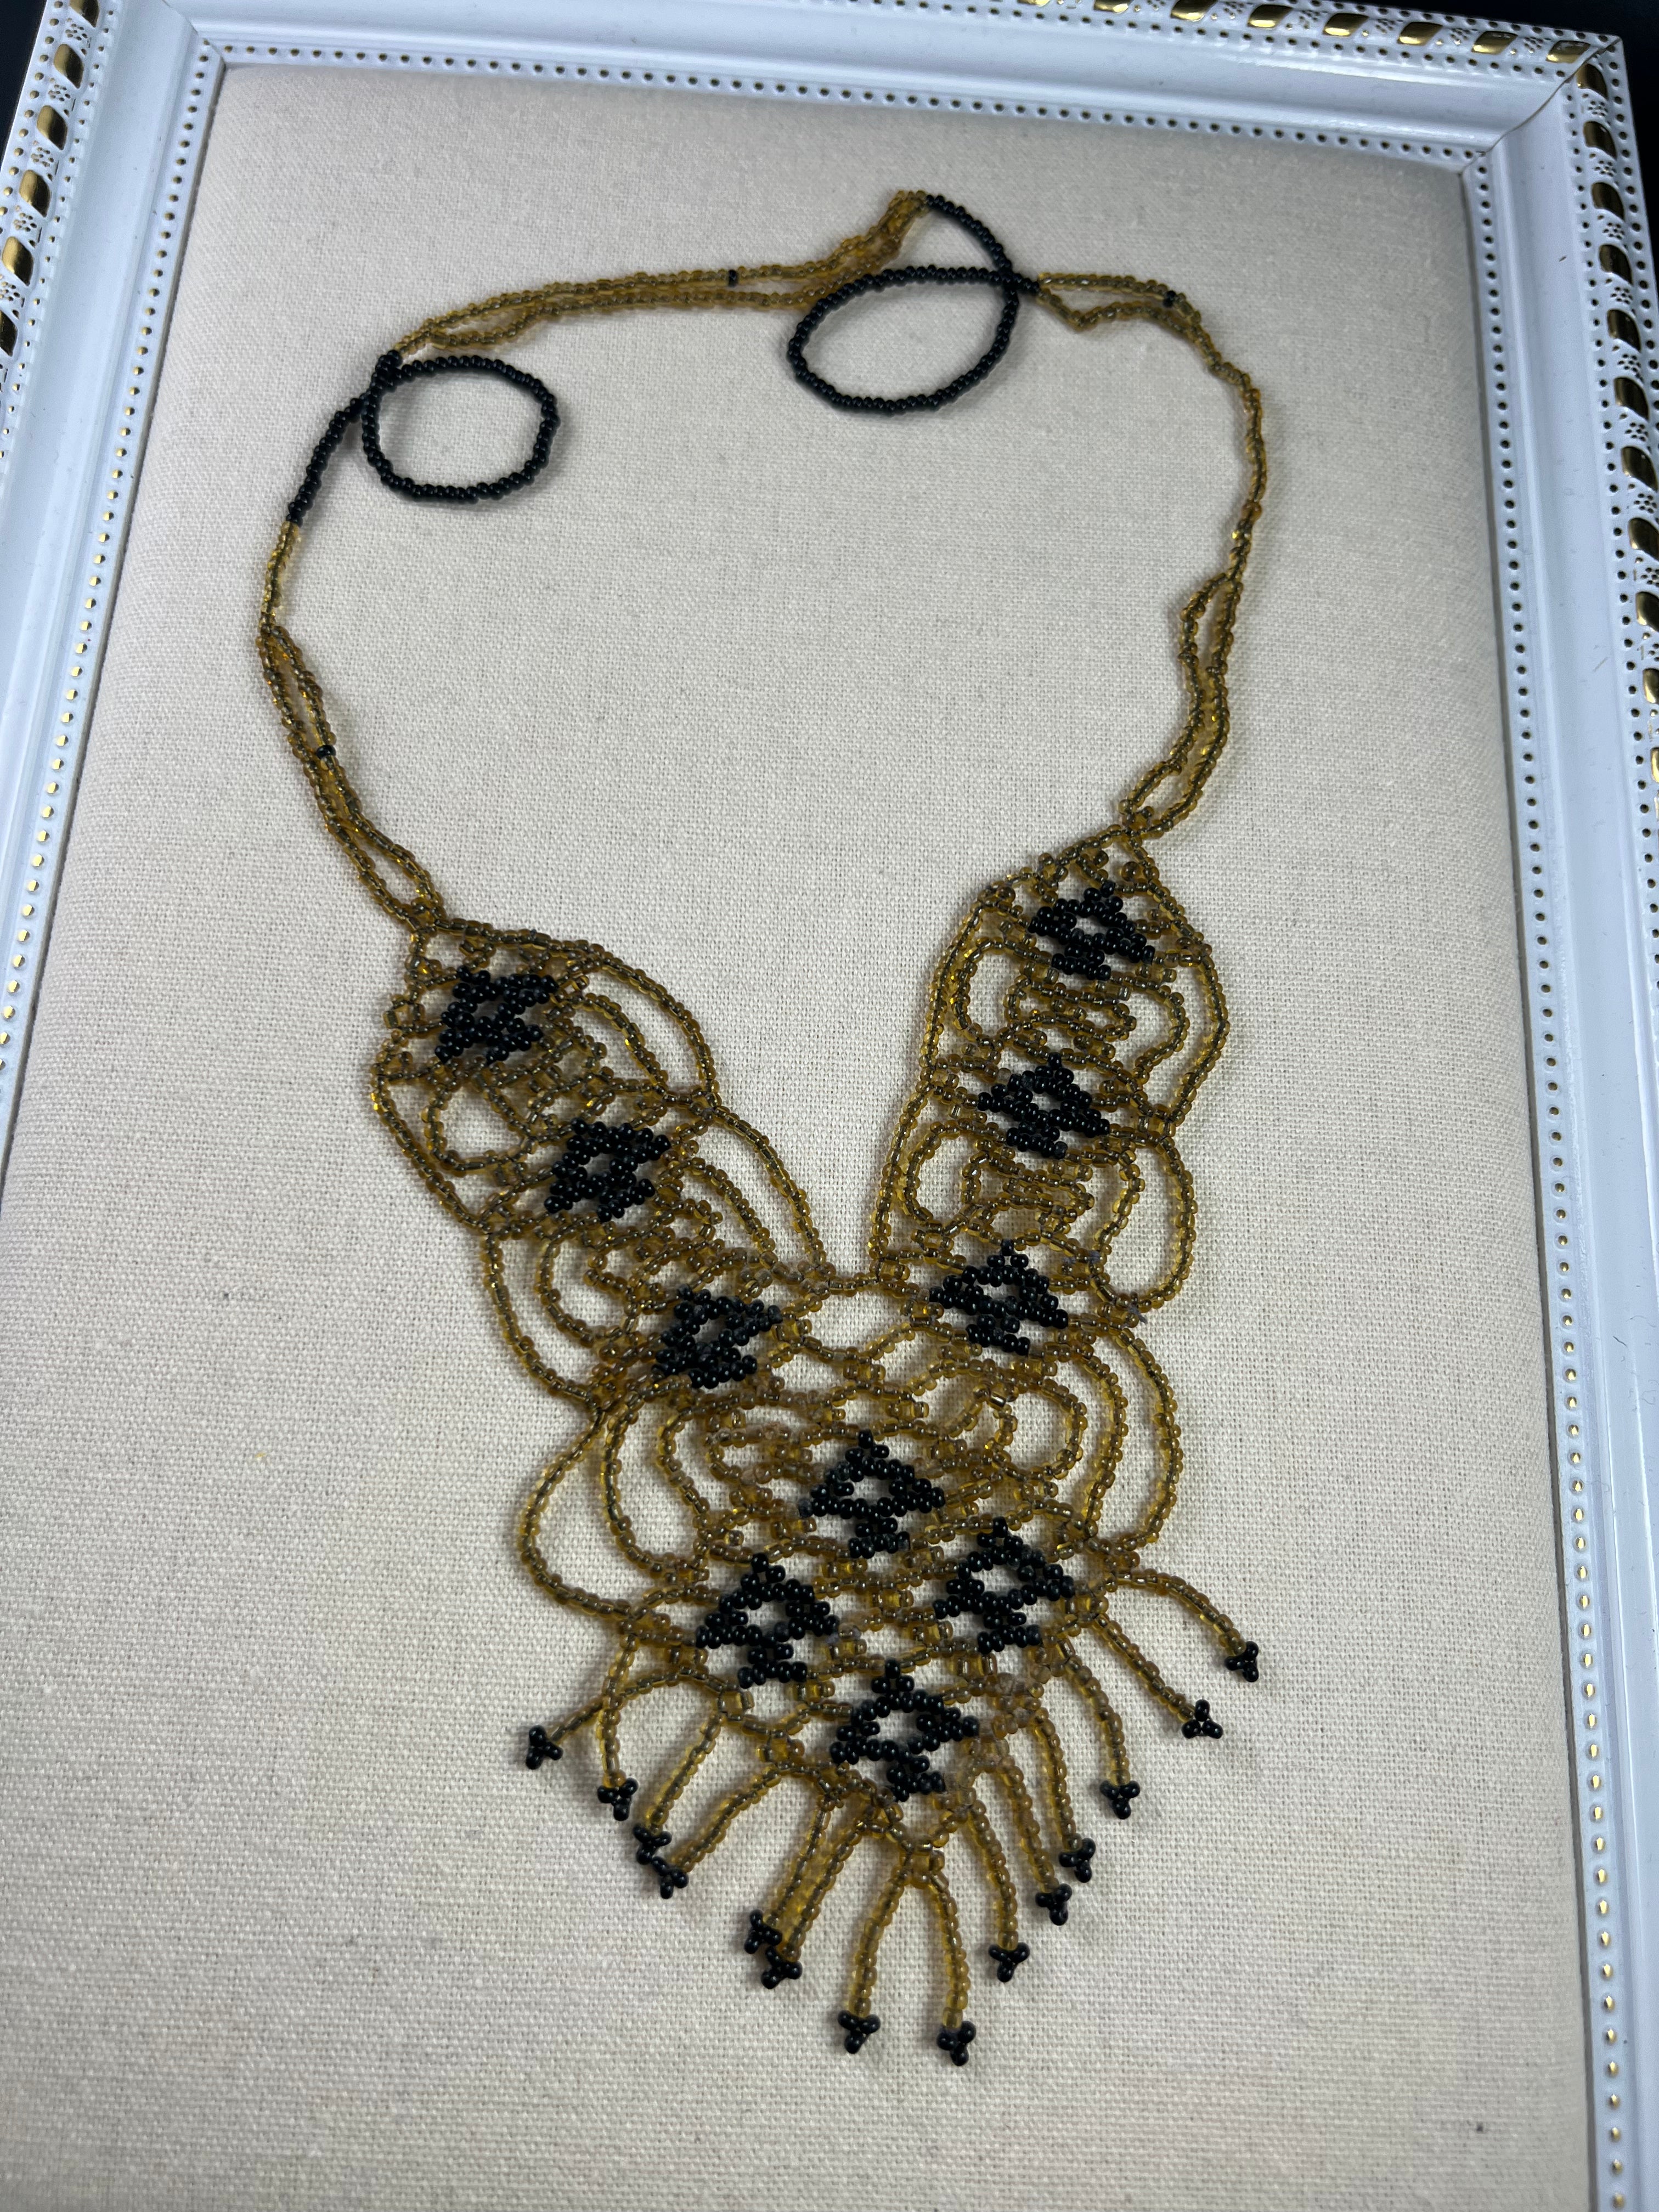 Beaded Macrame Vintage Necklace